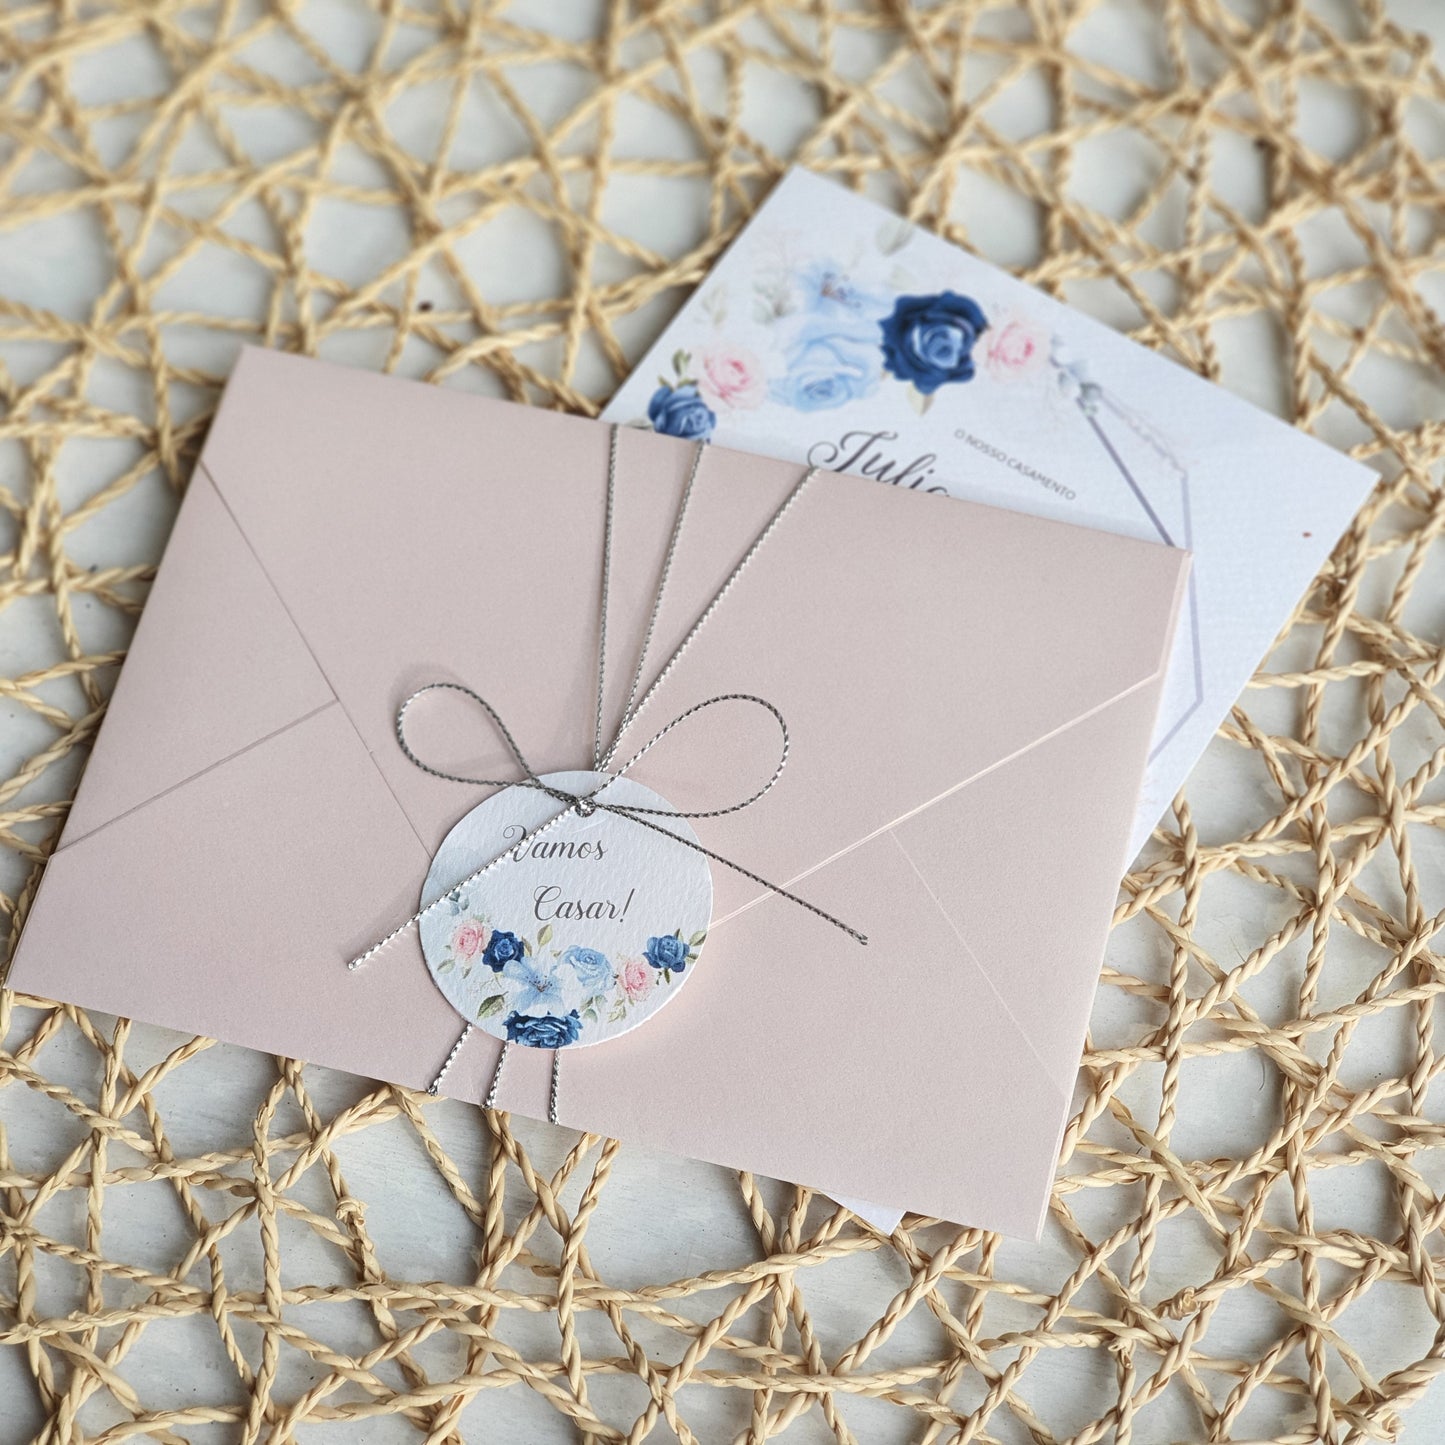 Convite envelope blush and blue